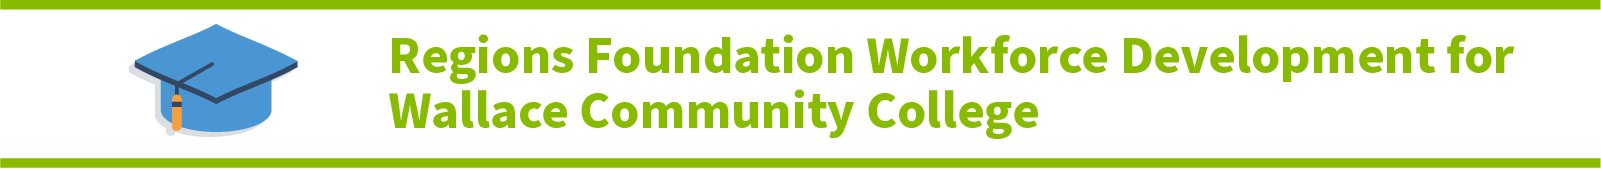 Regions Foundation workforce development for Wallace Community College